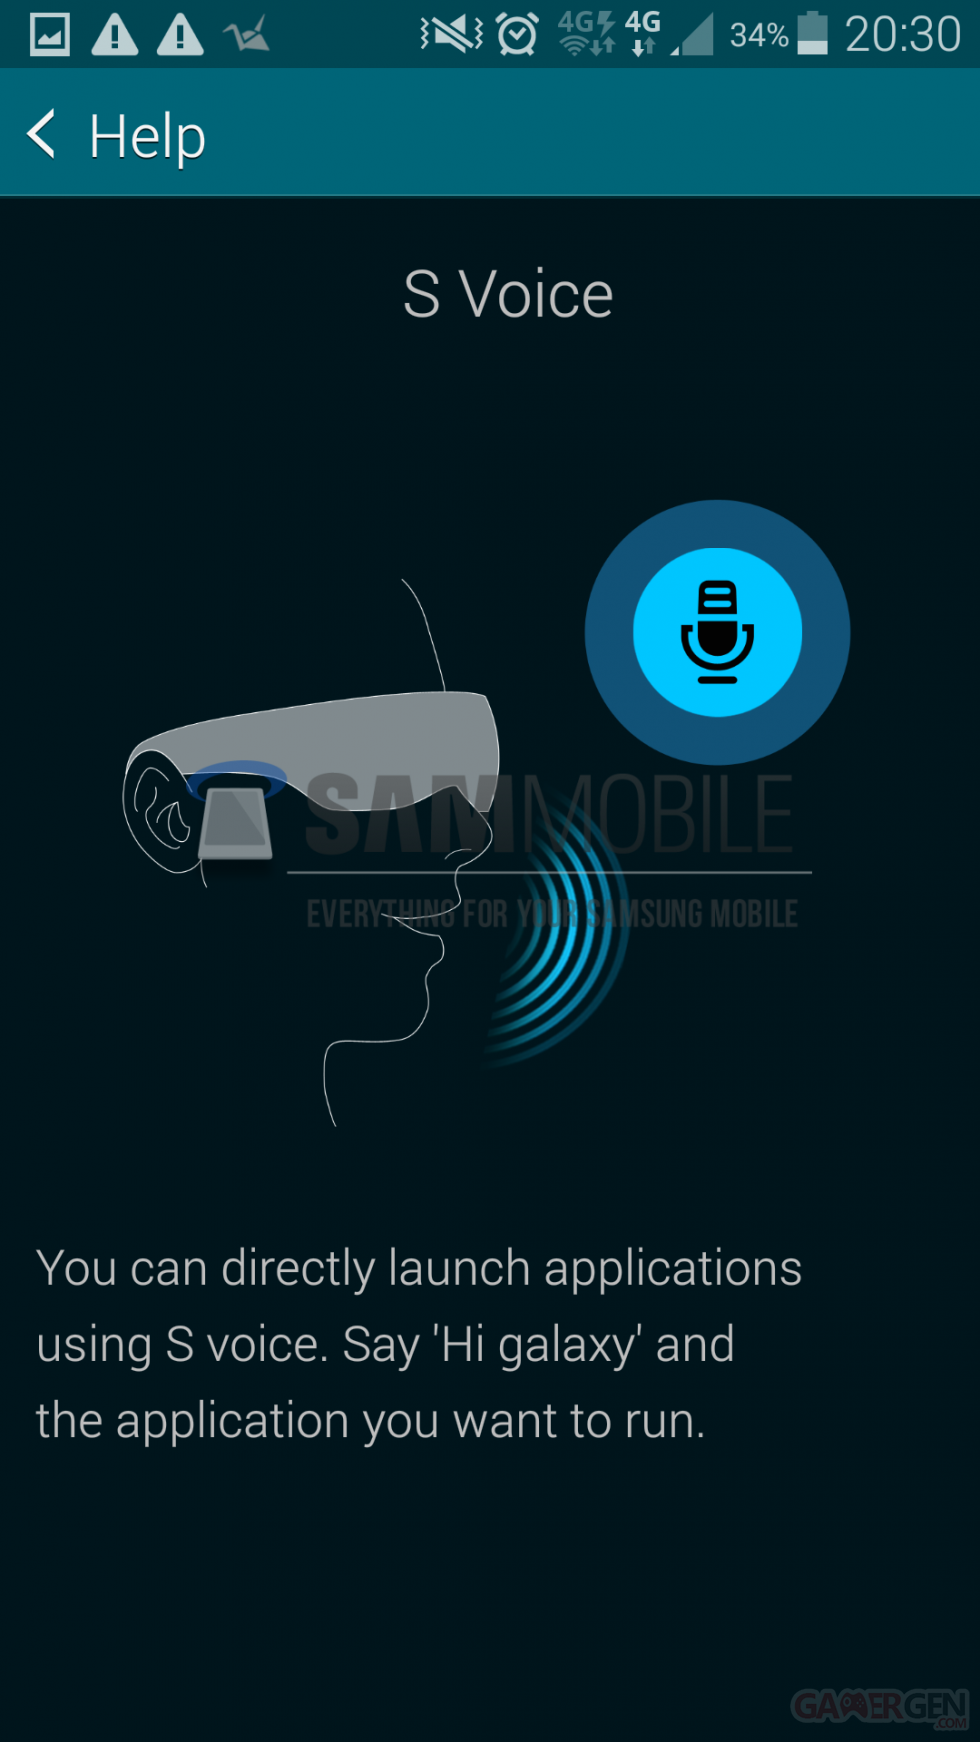 Samsung-Gear-VR-application-12